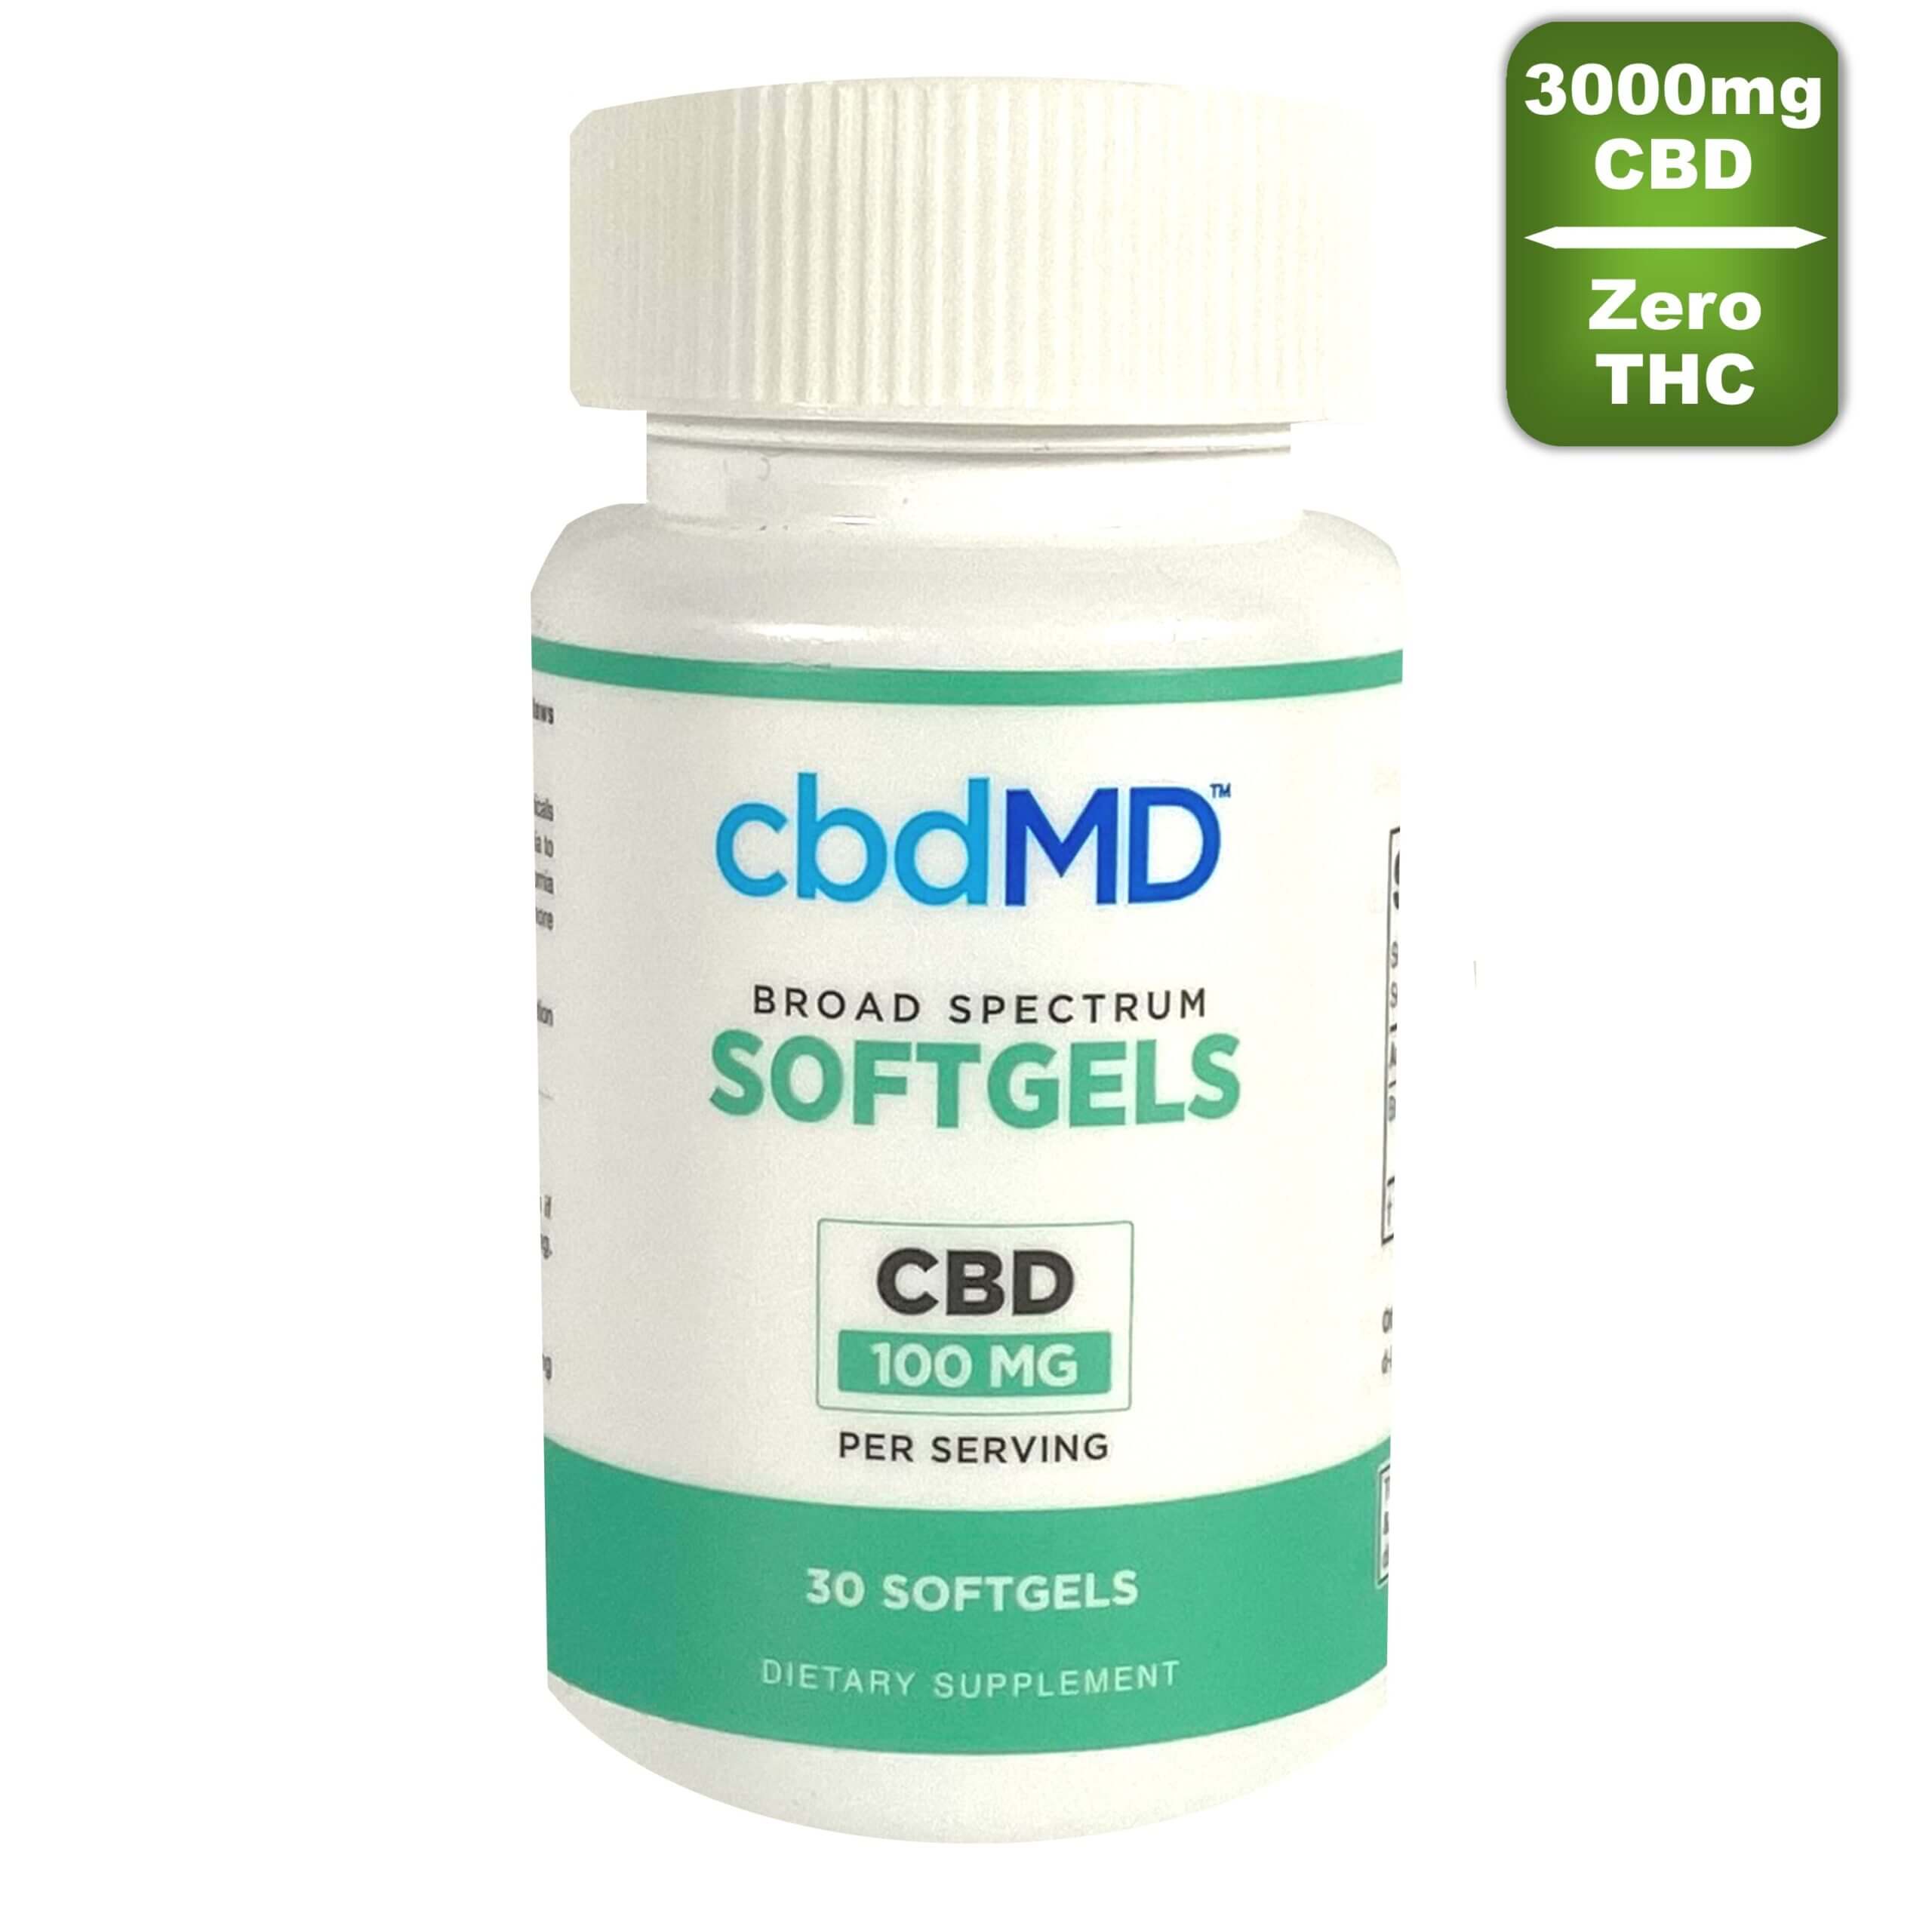 cbdmd -CBD Softgels - 3000mg CBD - broad spectrum - 30 count